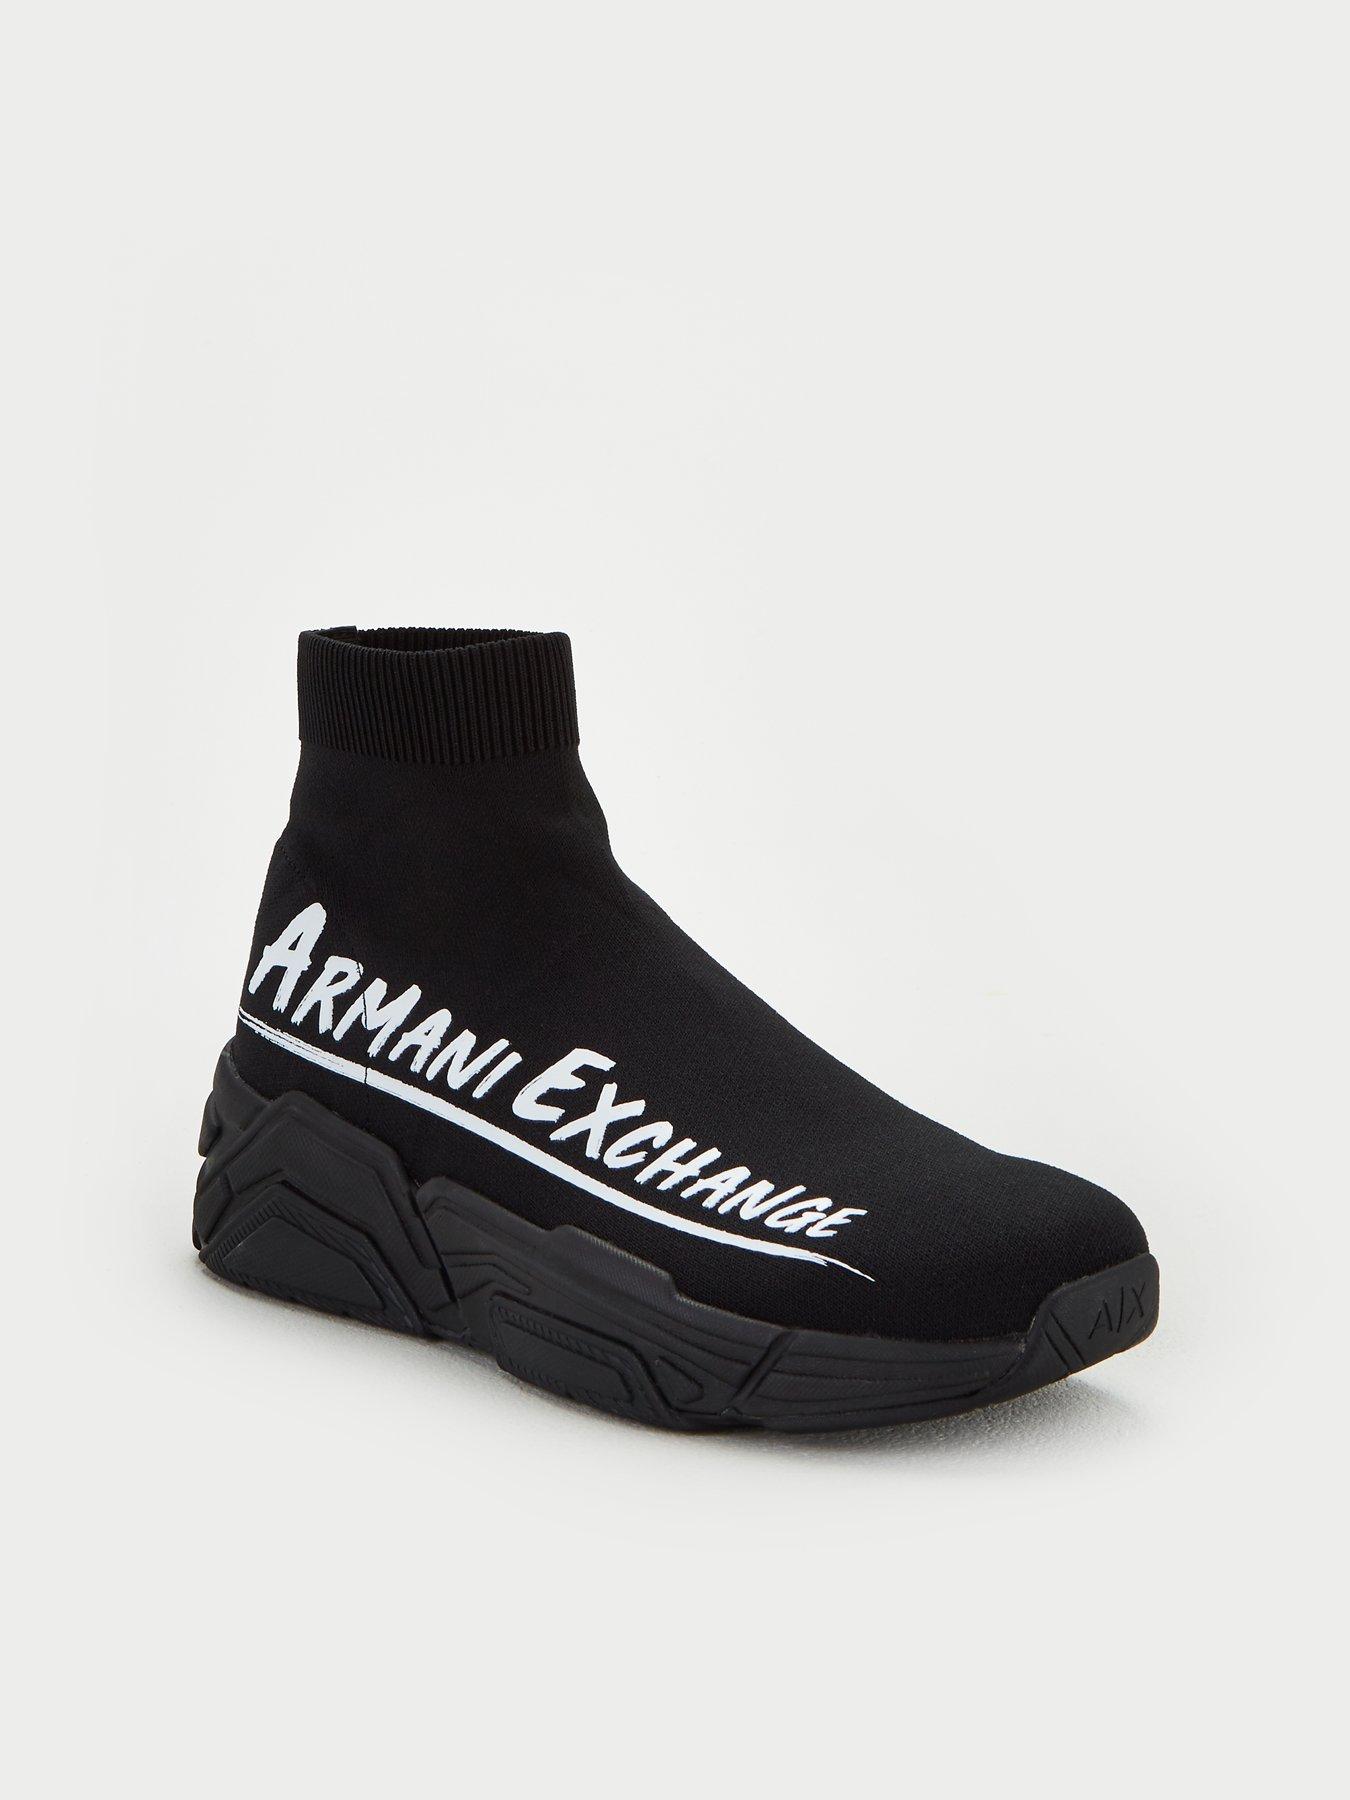 armani socks price